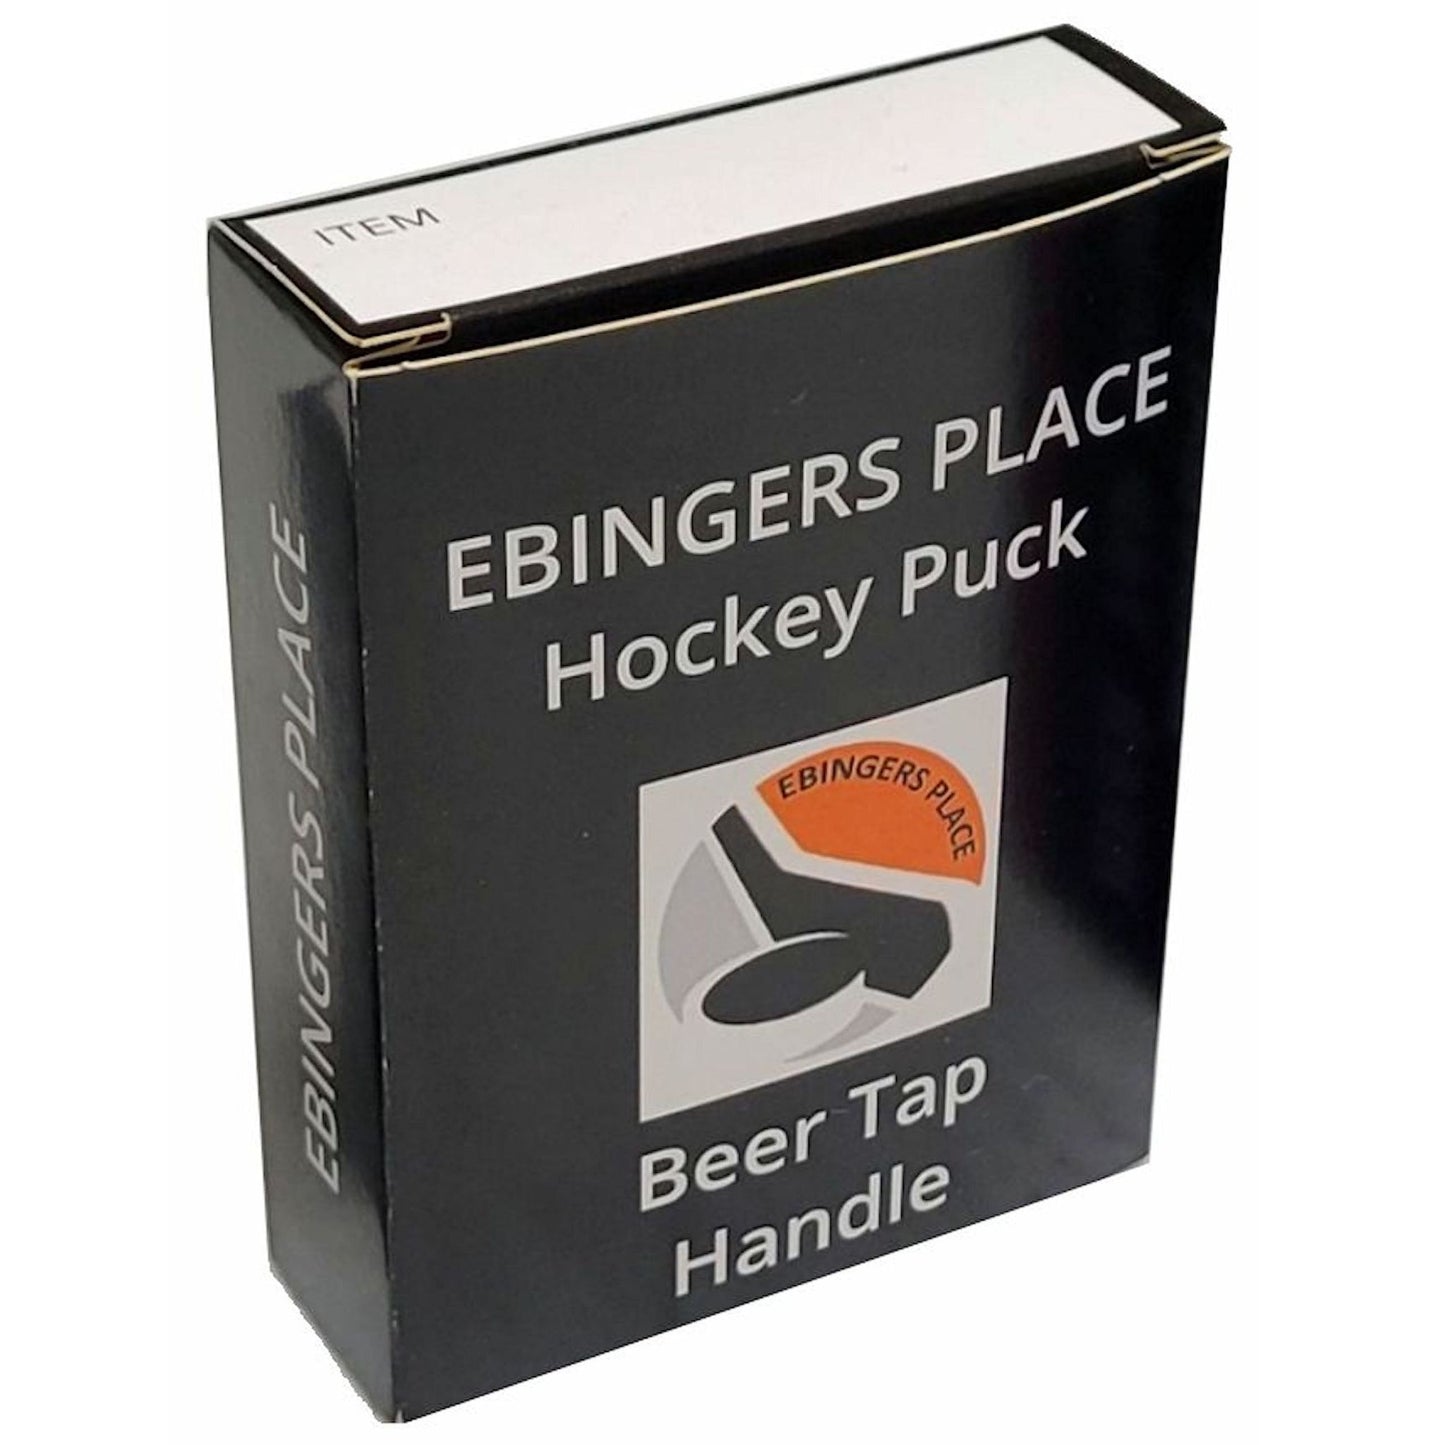 Tampa Bay Lightning Clone Series Hockey Puck Beer Tap Handle